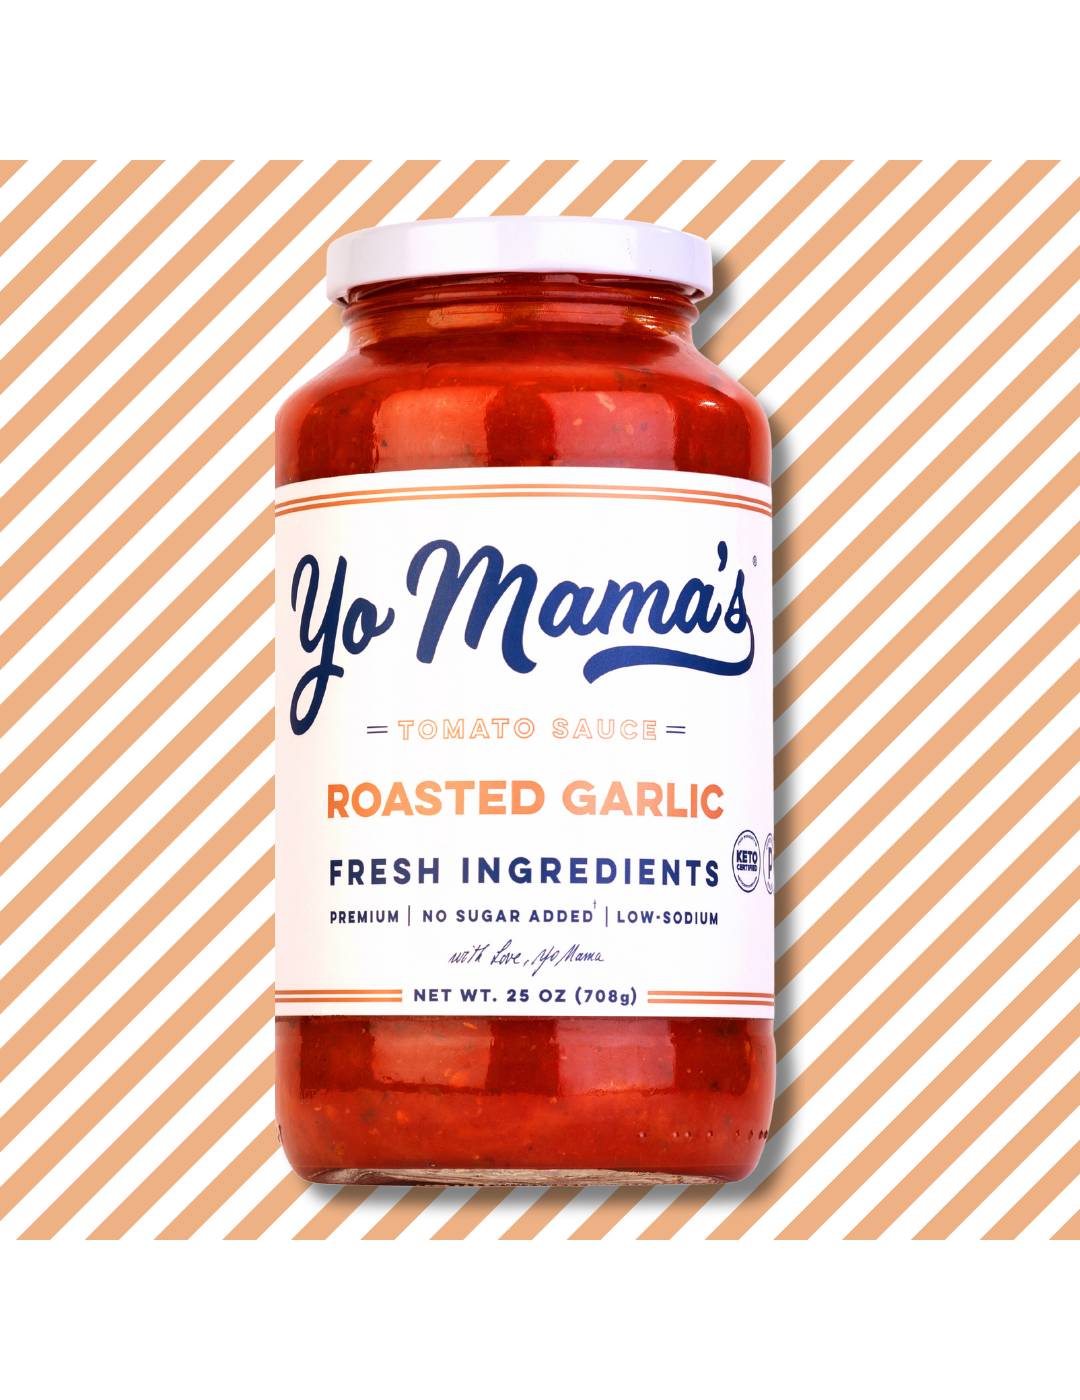 Yo Mama's Roasted Garlic Tomato Sauce; image 7 of 8